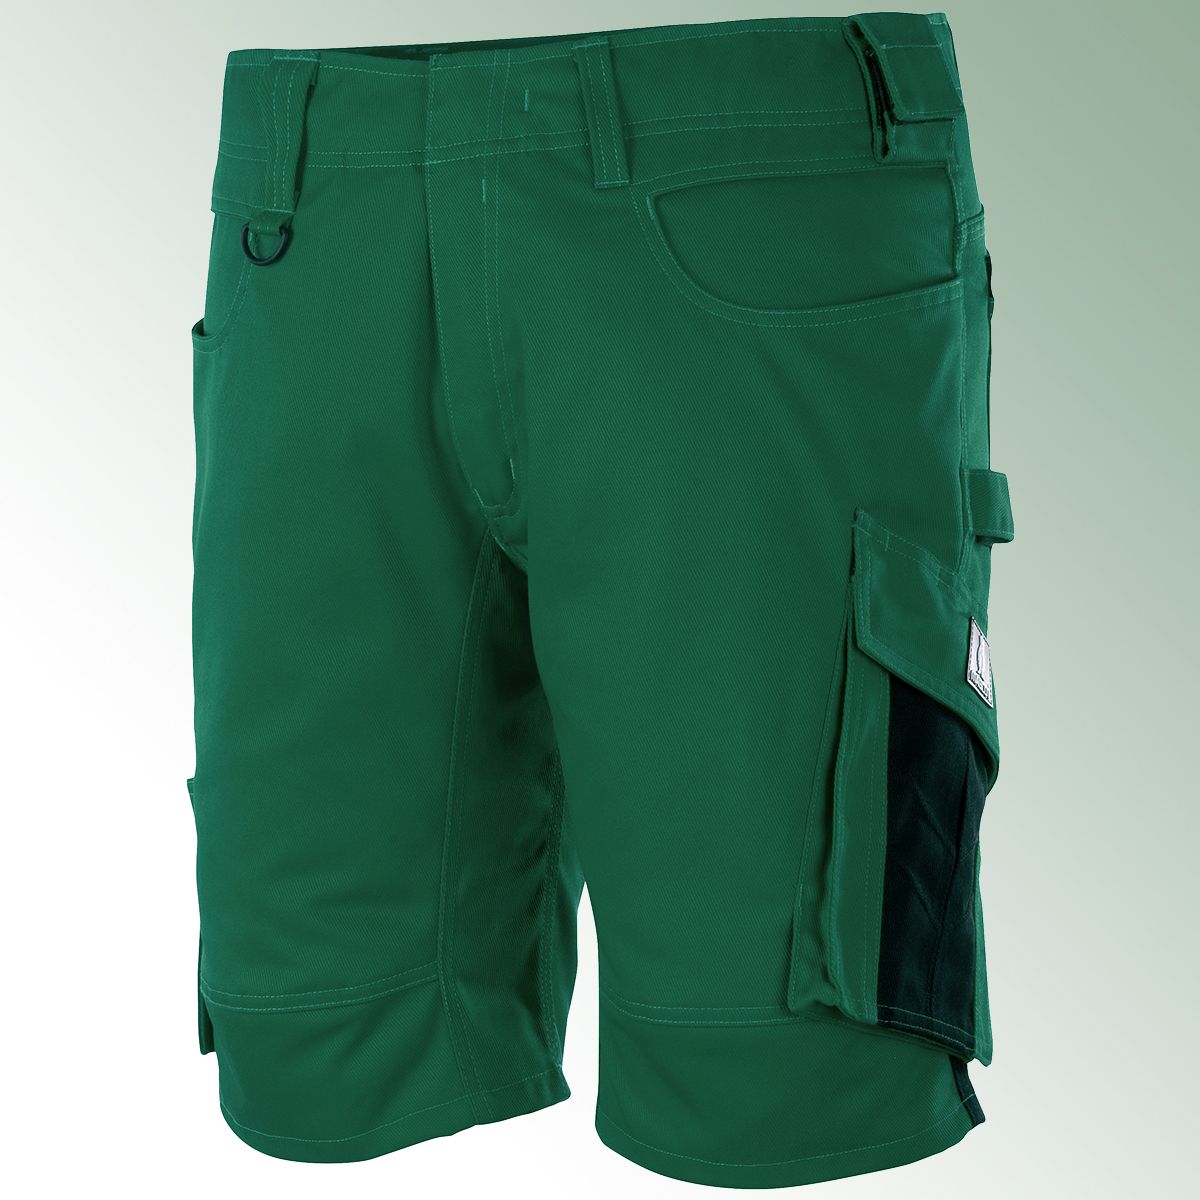 Work Shorts Stuttgart Size 58 Green / Black